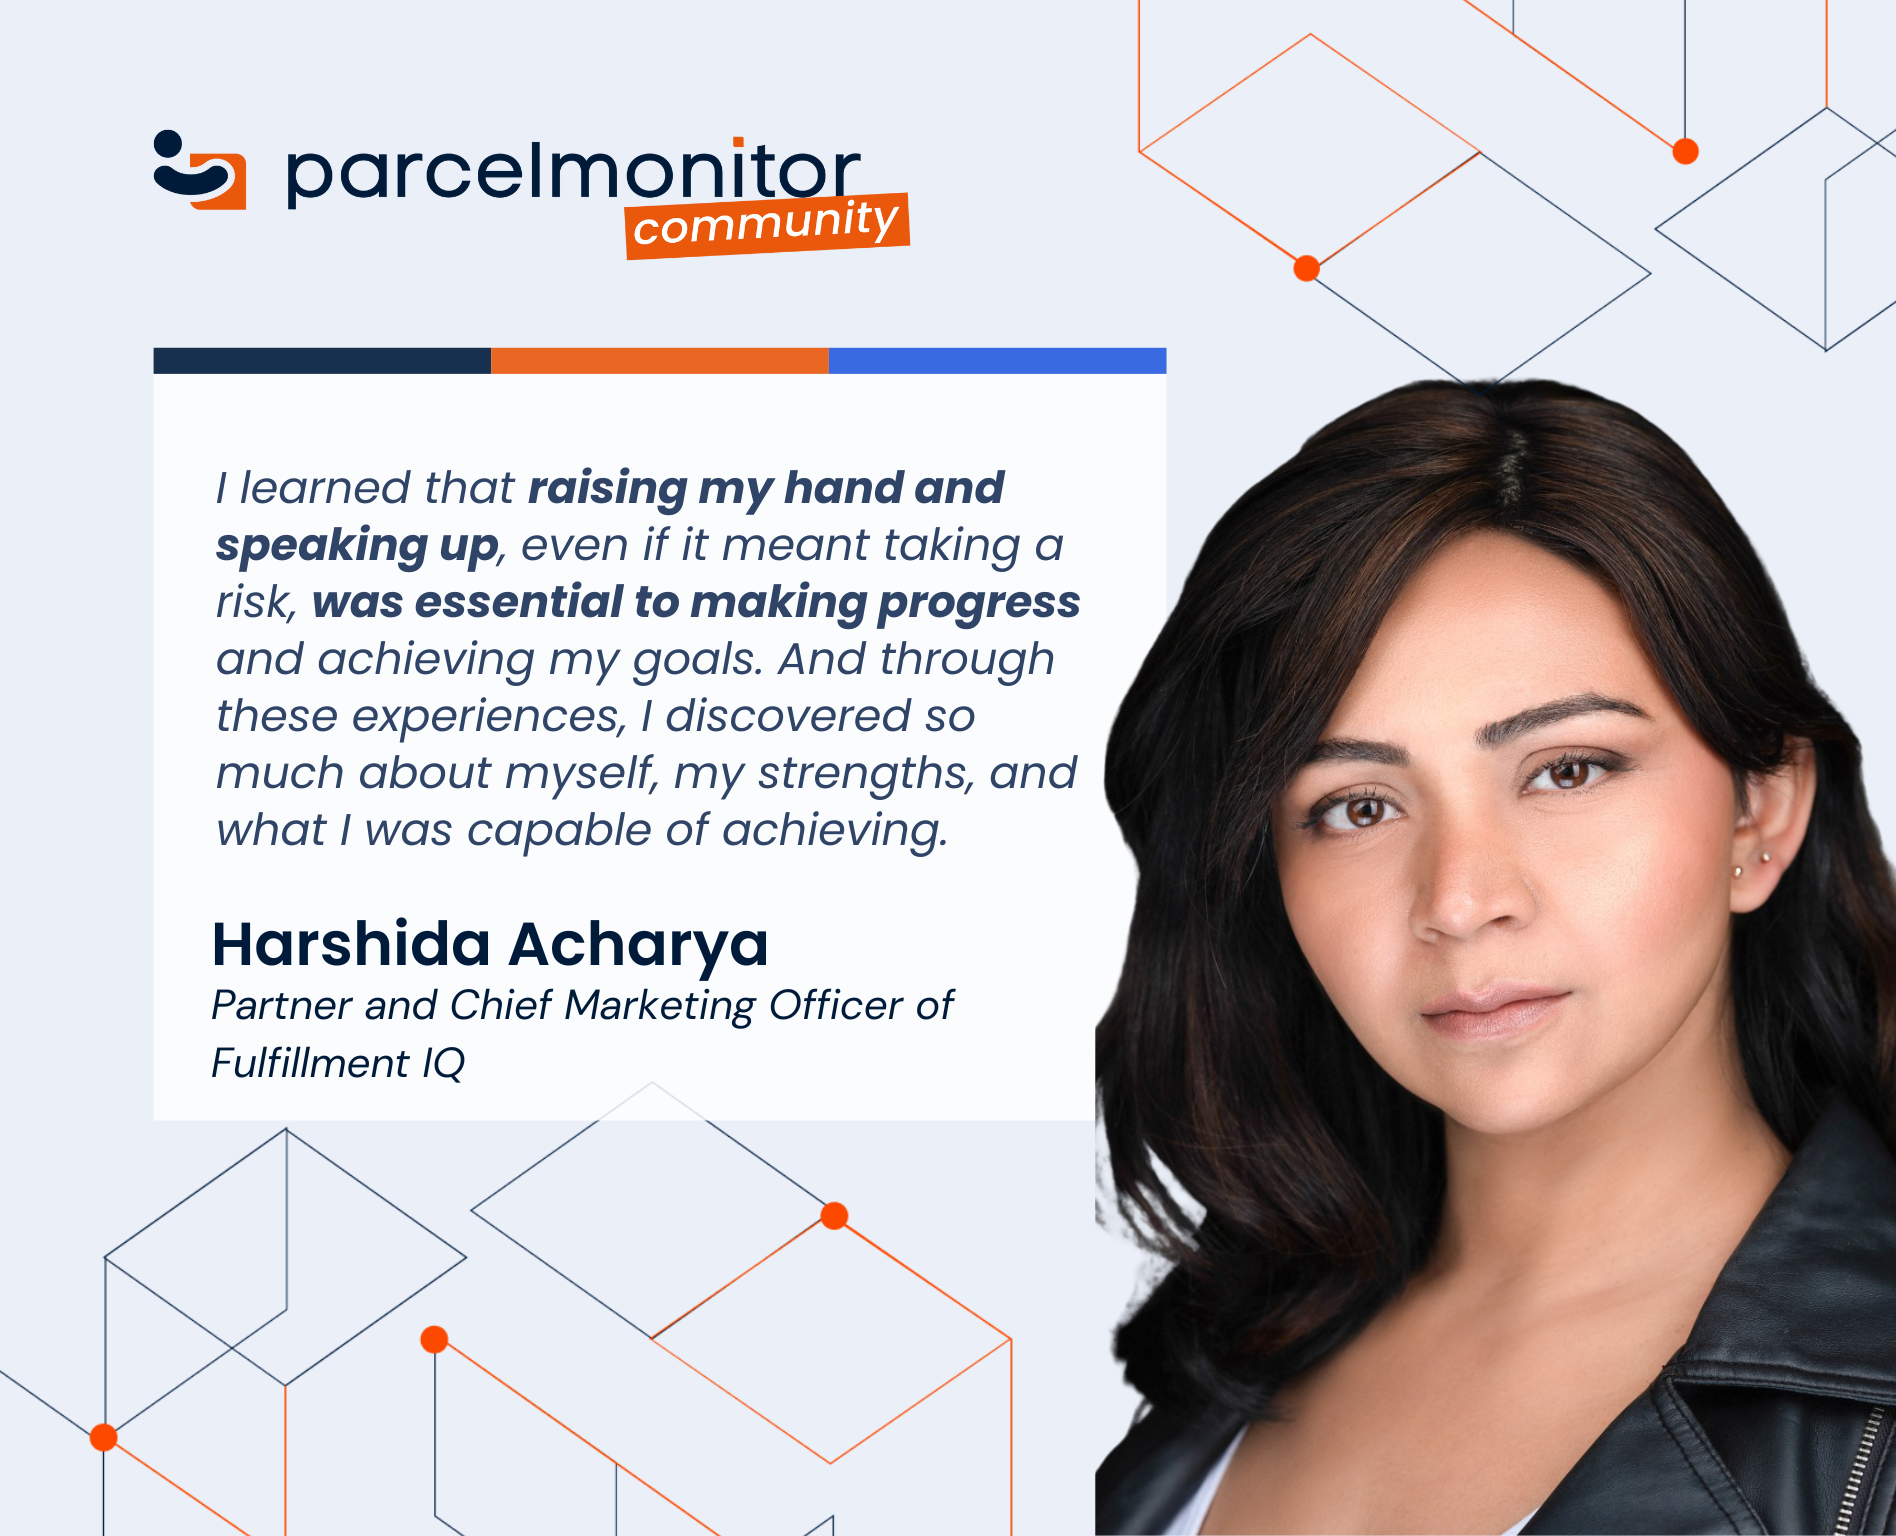 Harshida Acharya, Partner and Chief Marketing Officer at Fulfillment IQ